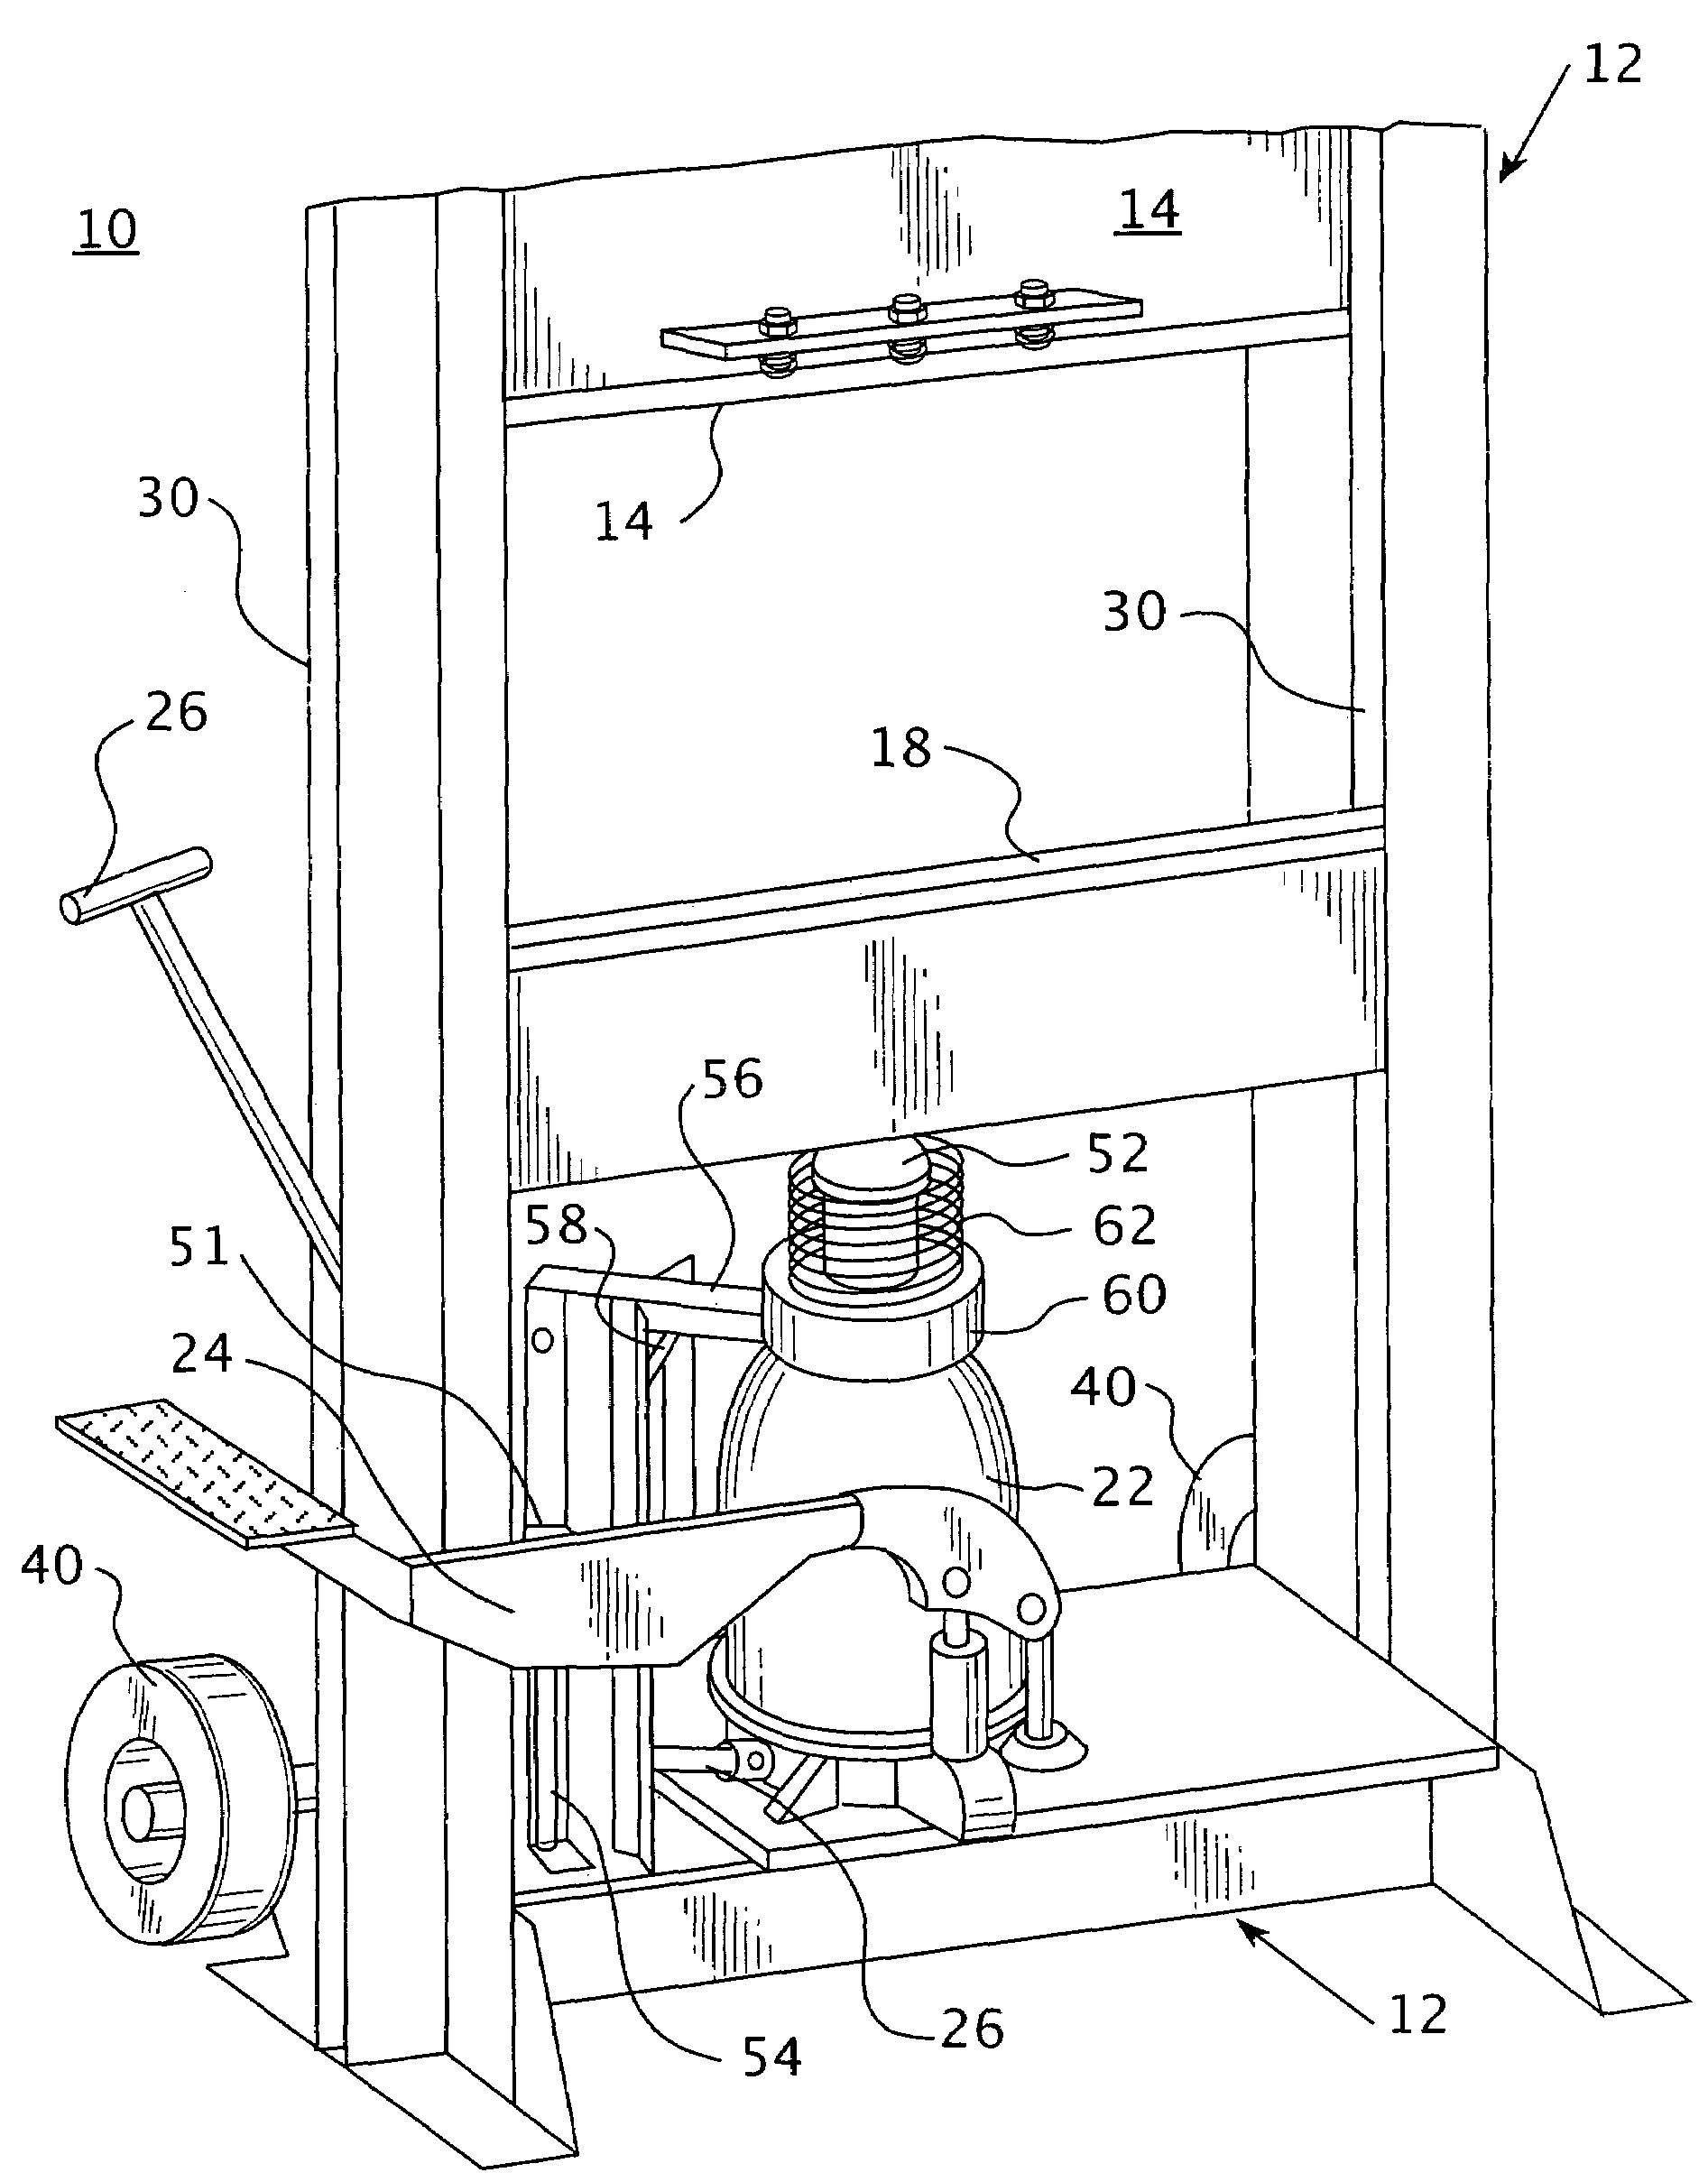 Apparatus and method for splitting masonry materials